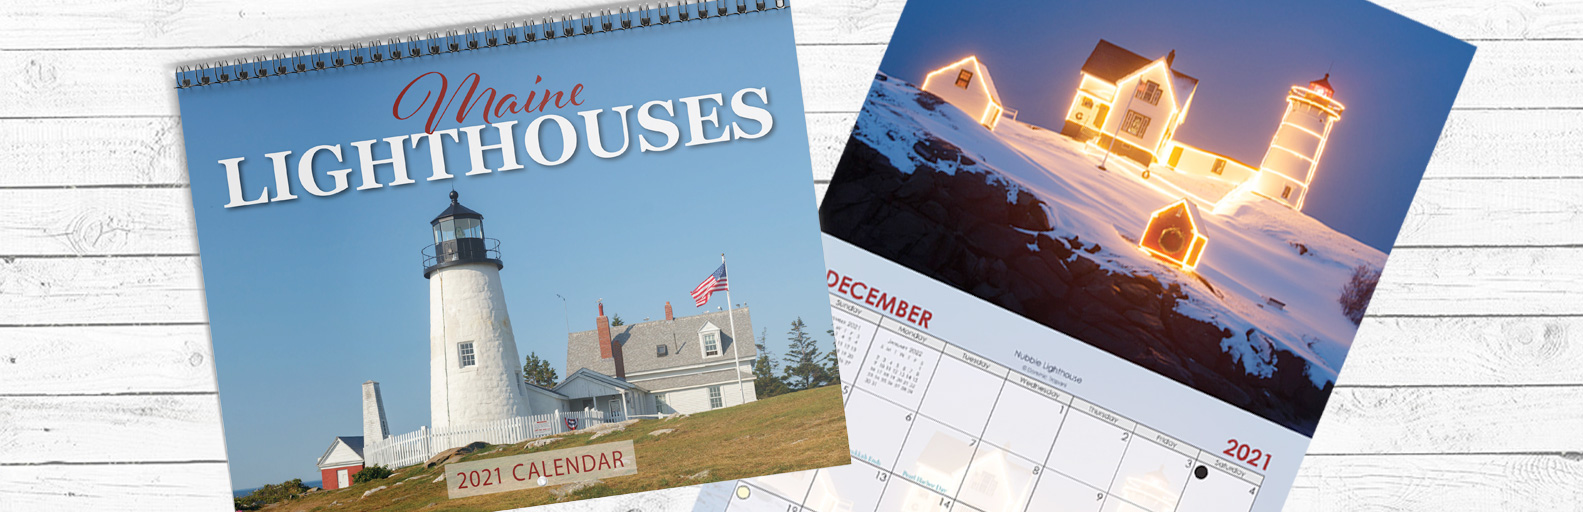 2021 Maine Lighthouse Calendar Released Maine Lights Today